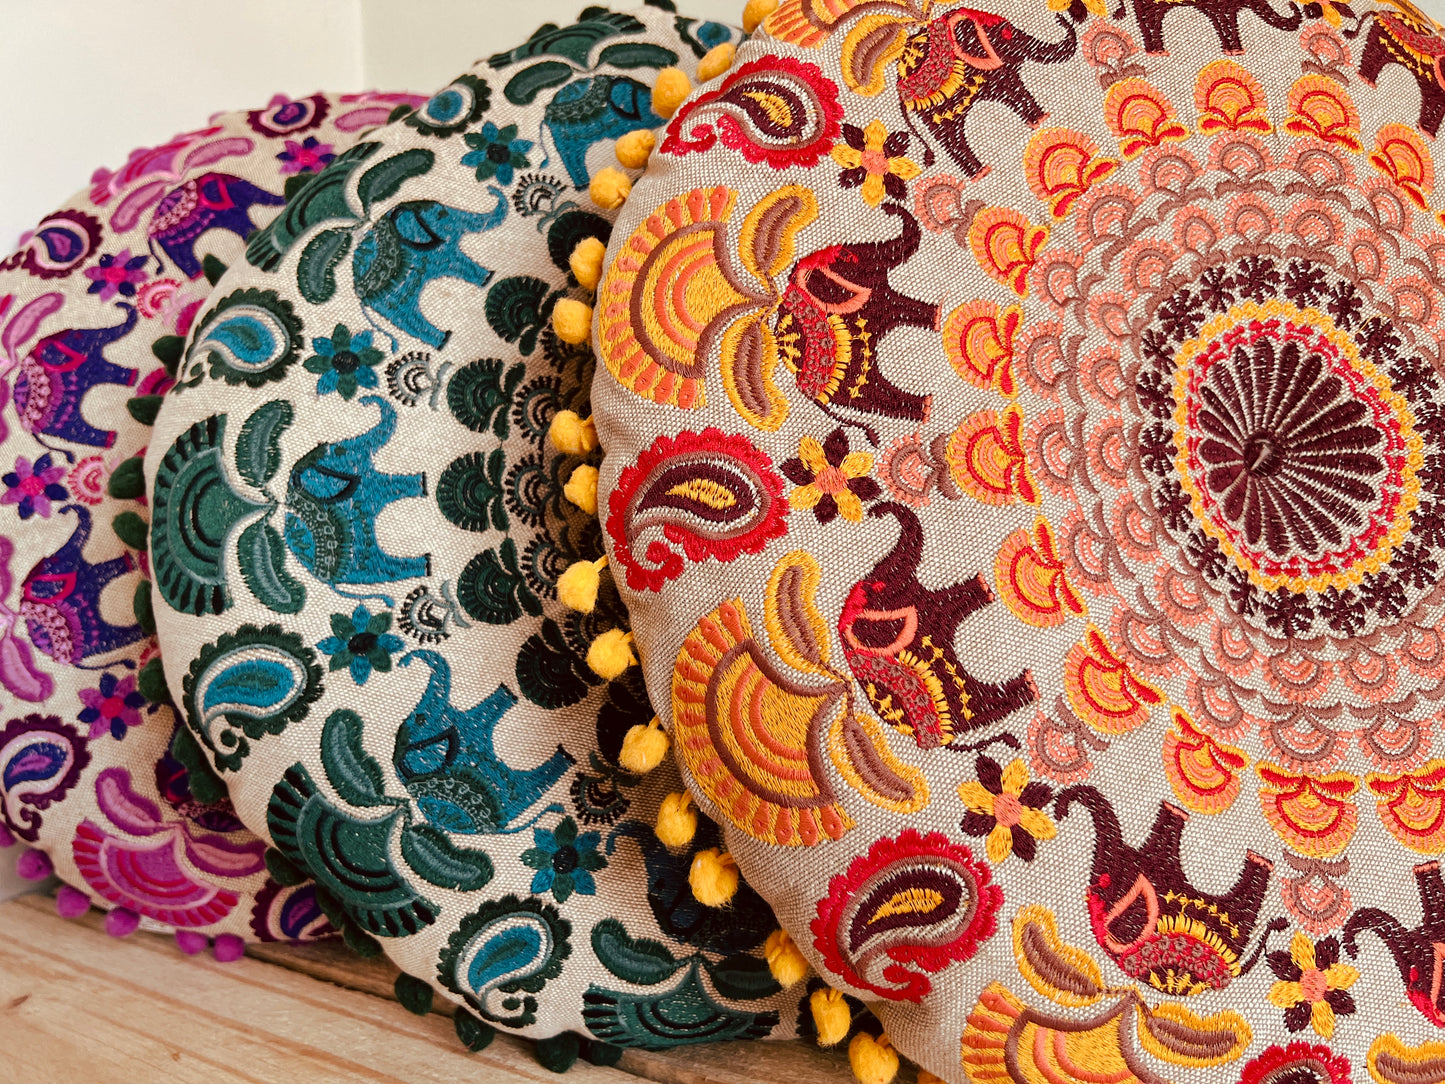 Handmade, Fair Trade Embroidered Yoga Meditation Cushion With Mandala Elephant Design